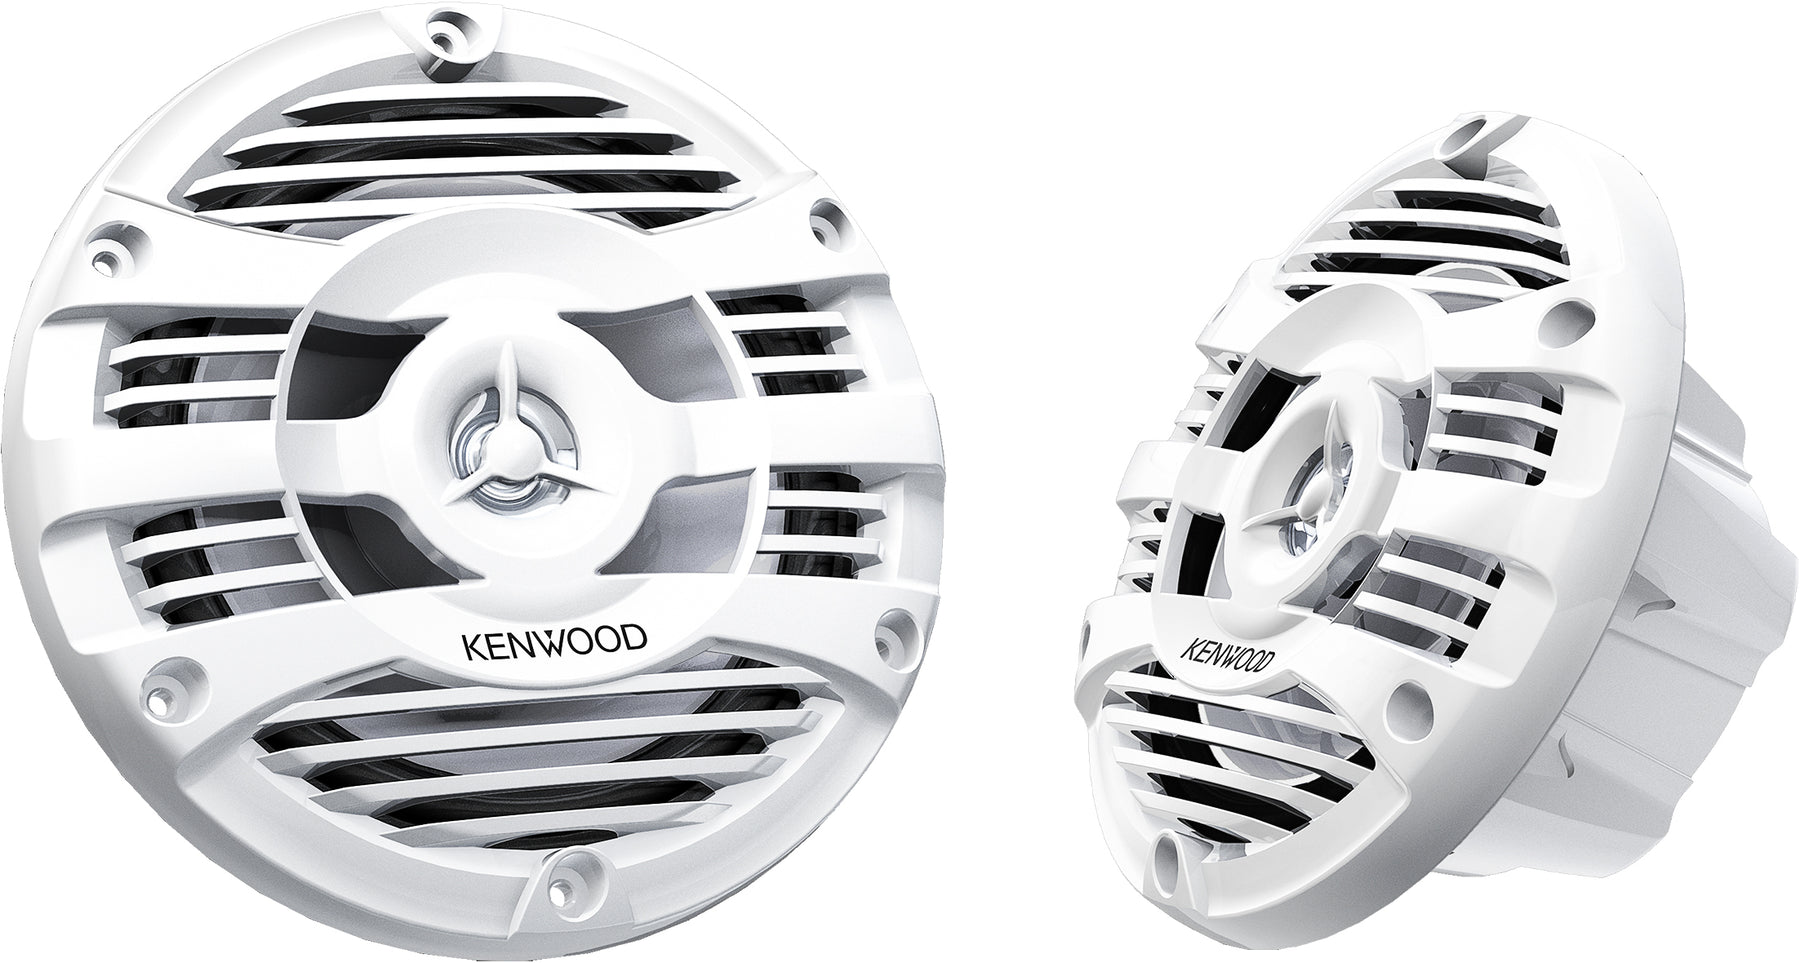 Kenwood KFC-1653MRW Speakers marini, 16cm, 2 vie , montaggio estern